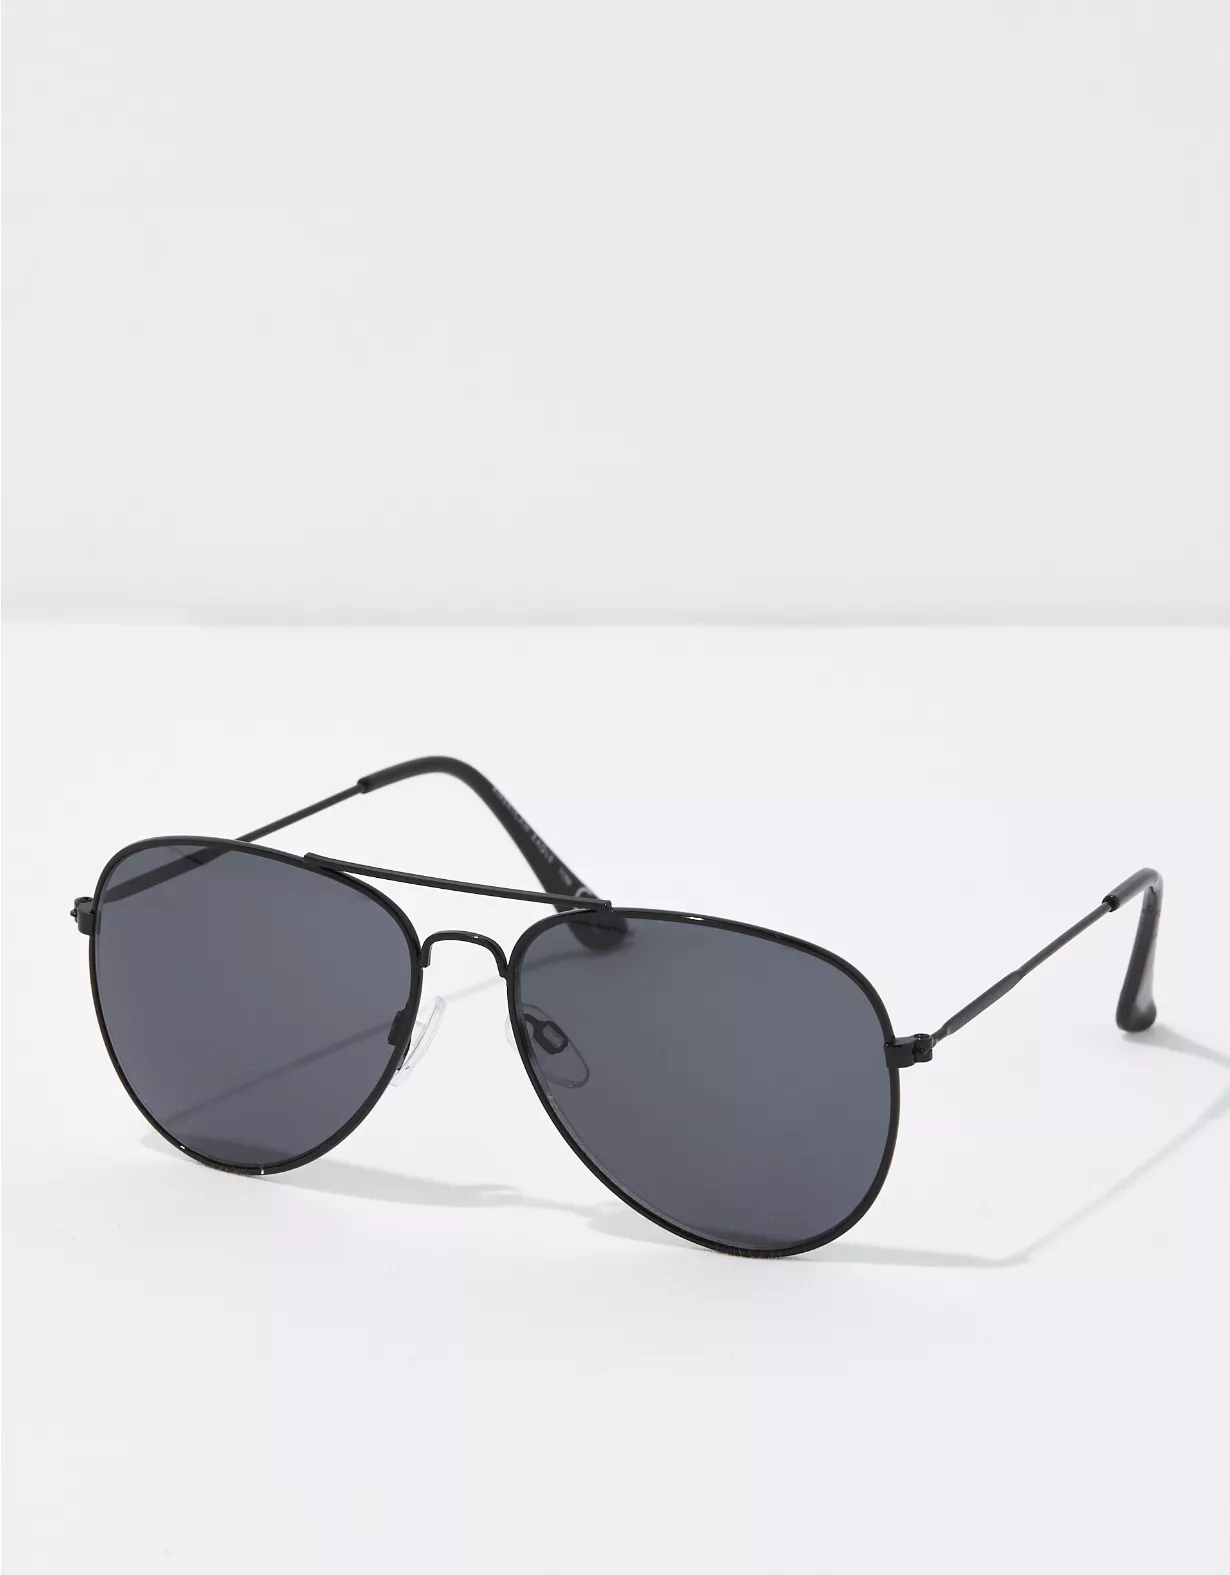 AEO Black Aviator Sunglasses